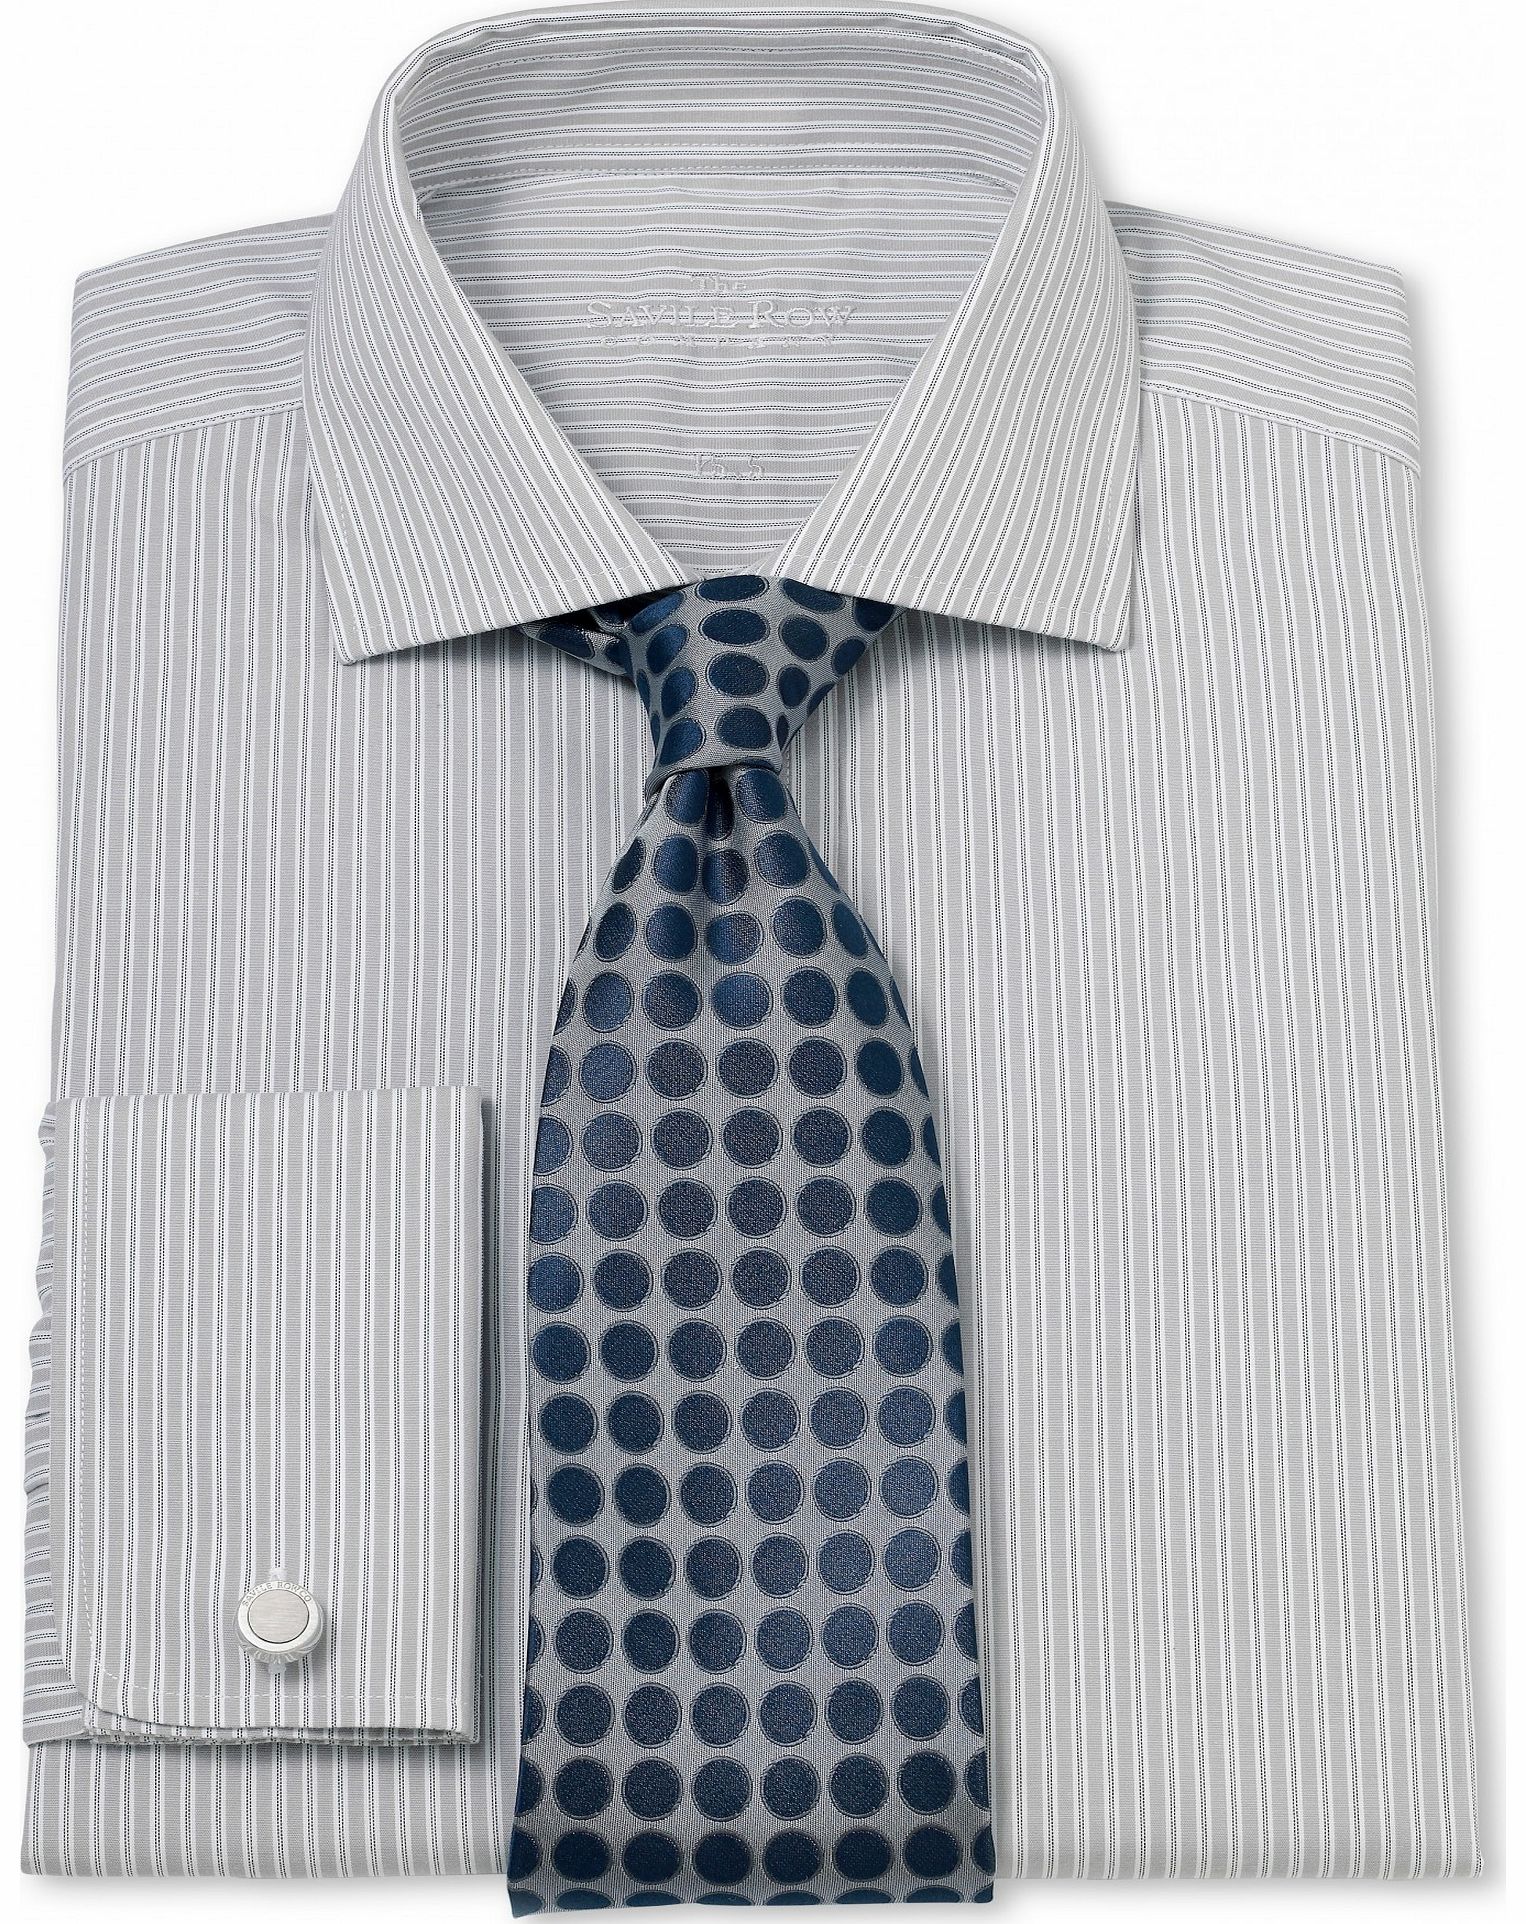 Savile Row Company Grey White Stripe Slim Fit Shirt 17`` Lengthened